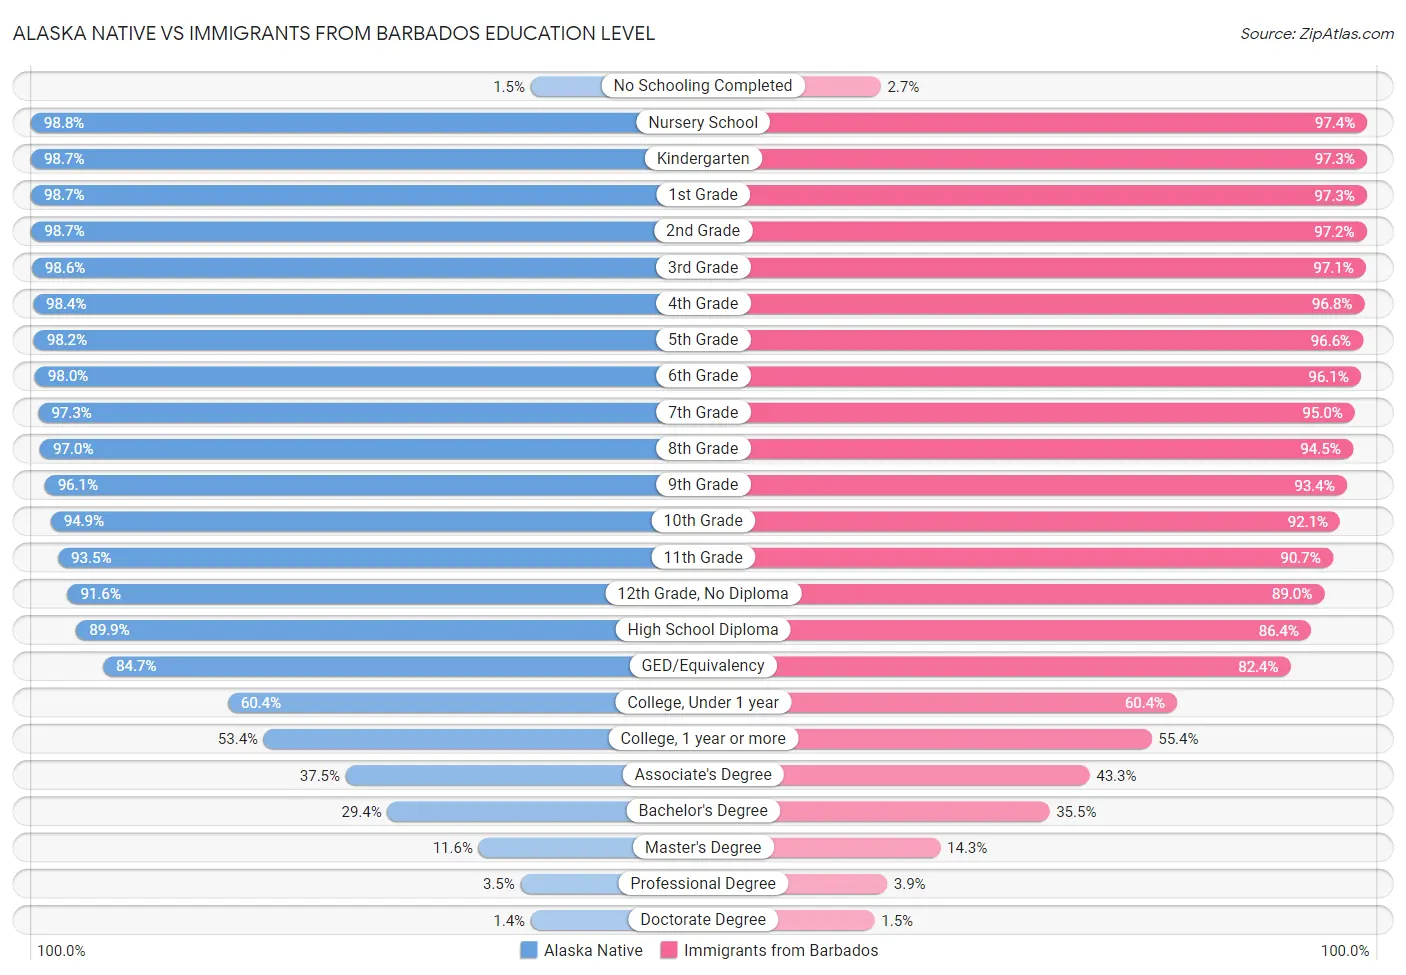 Alaska Native vs Immigrants from Barbados Education Level